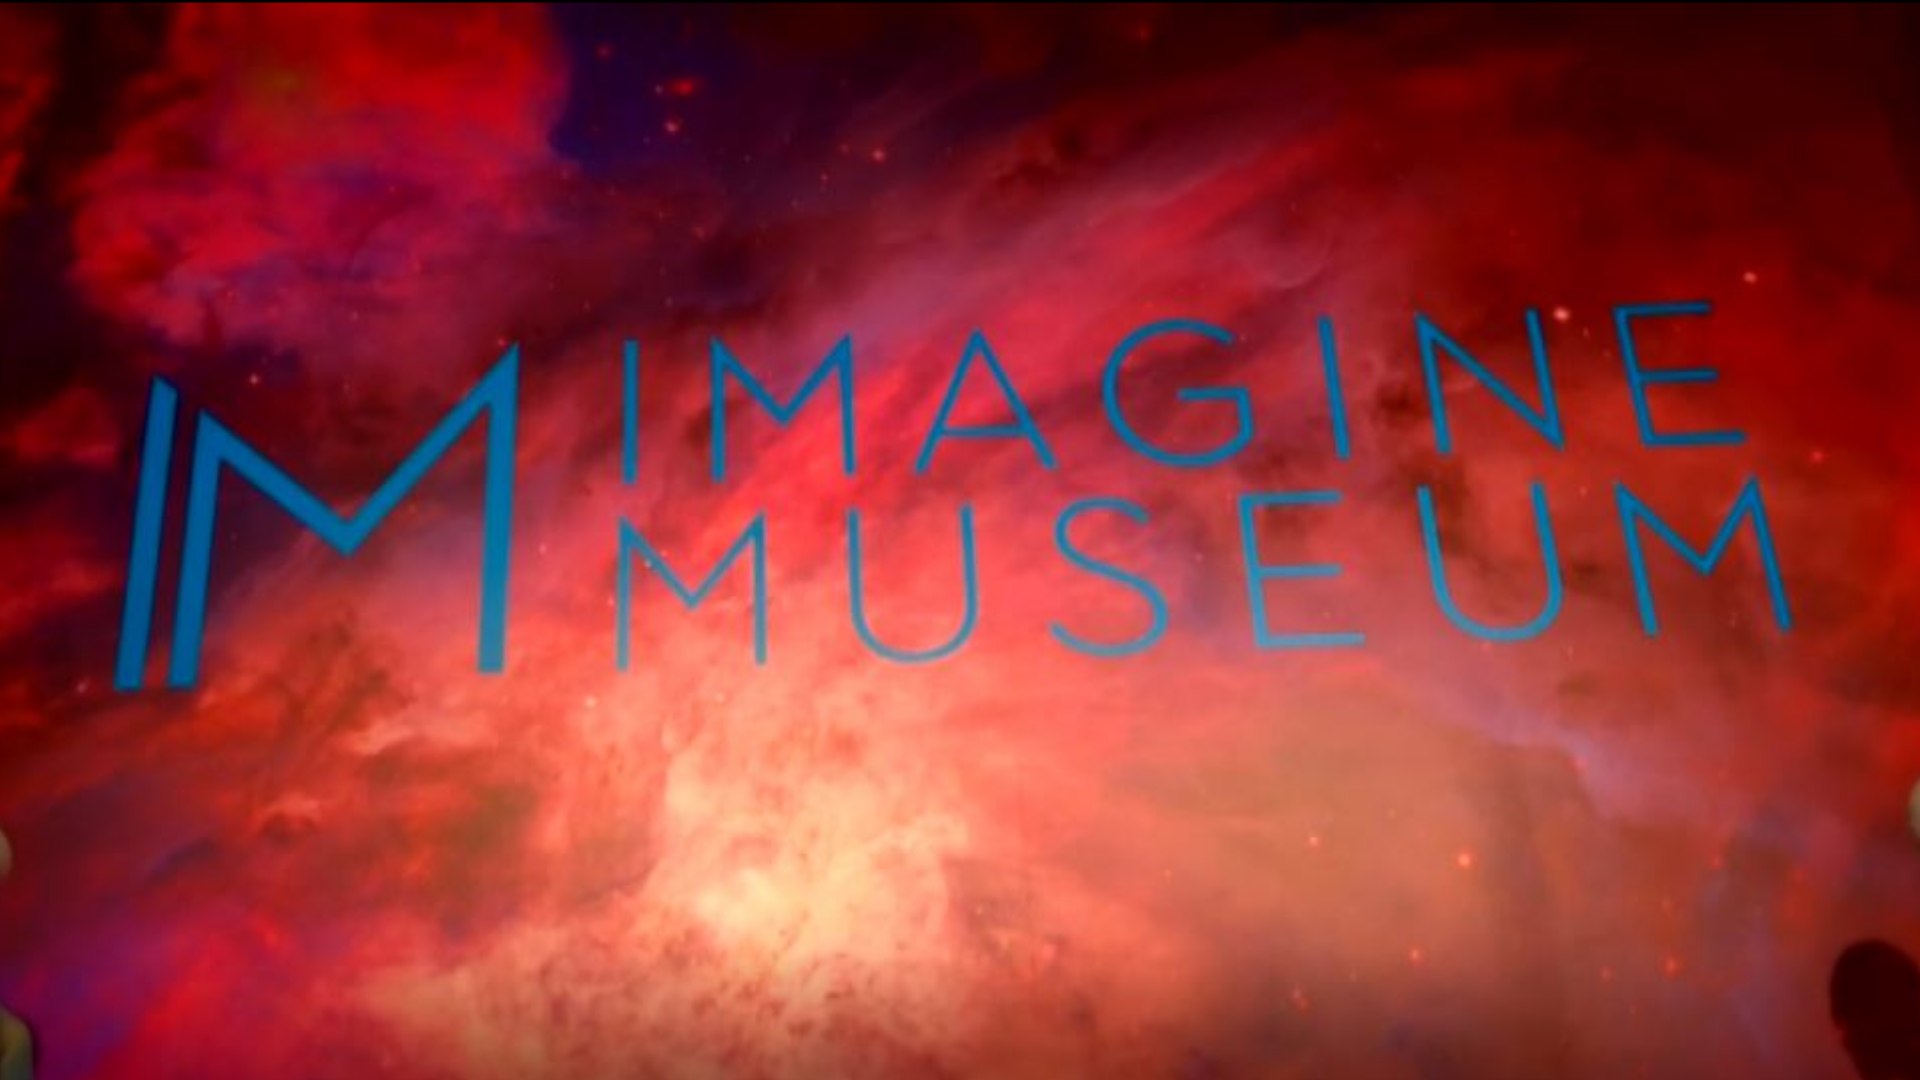 10News feature reporter Jabari Thomas takes us into Imagine Museum.